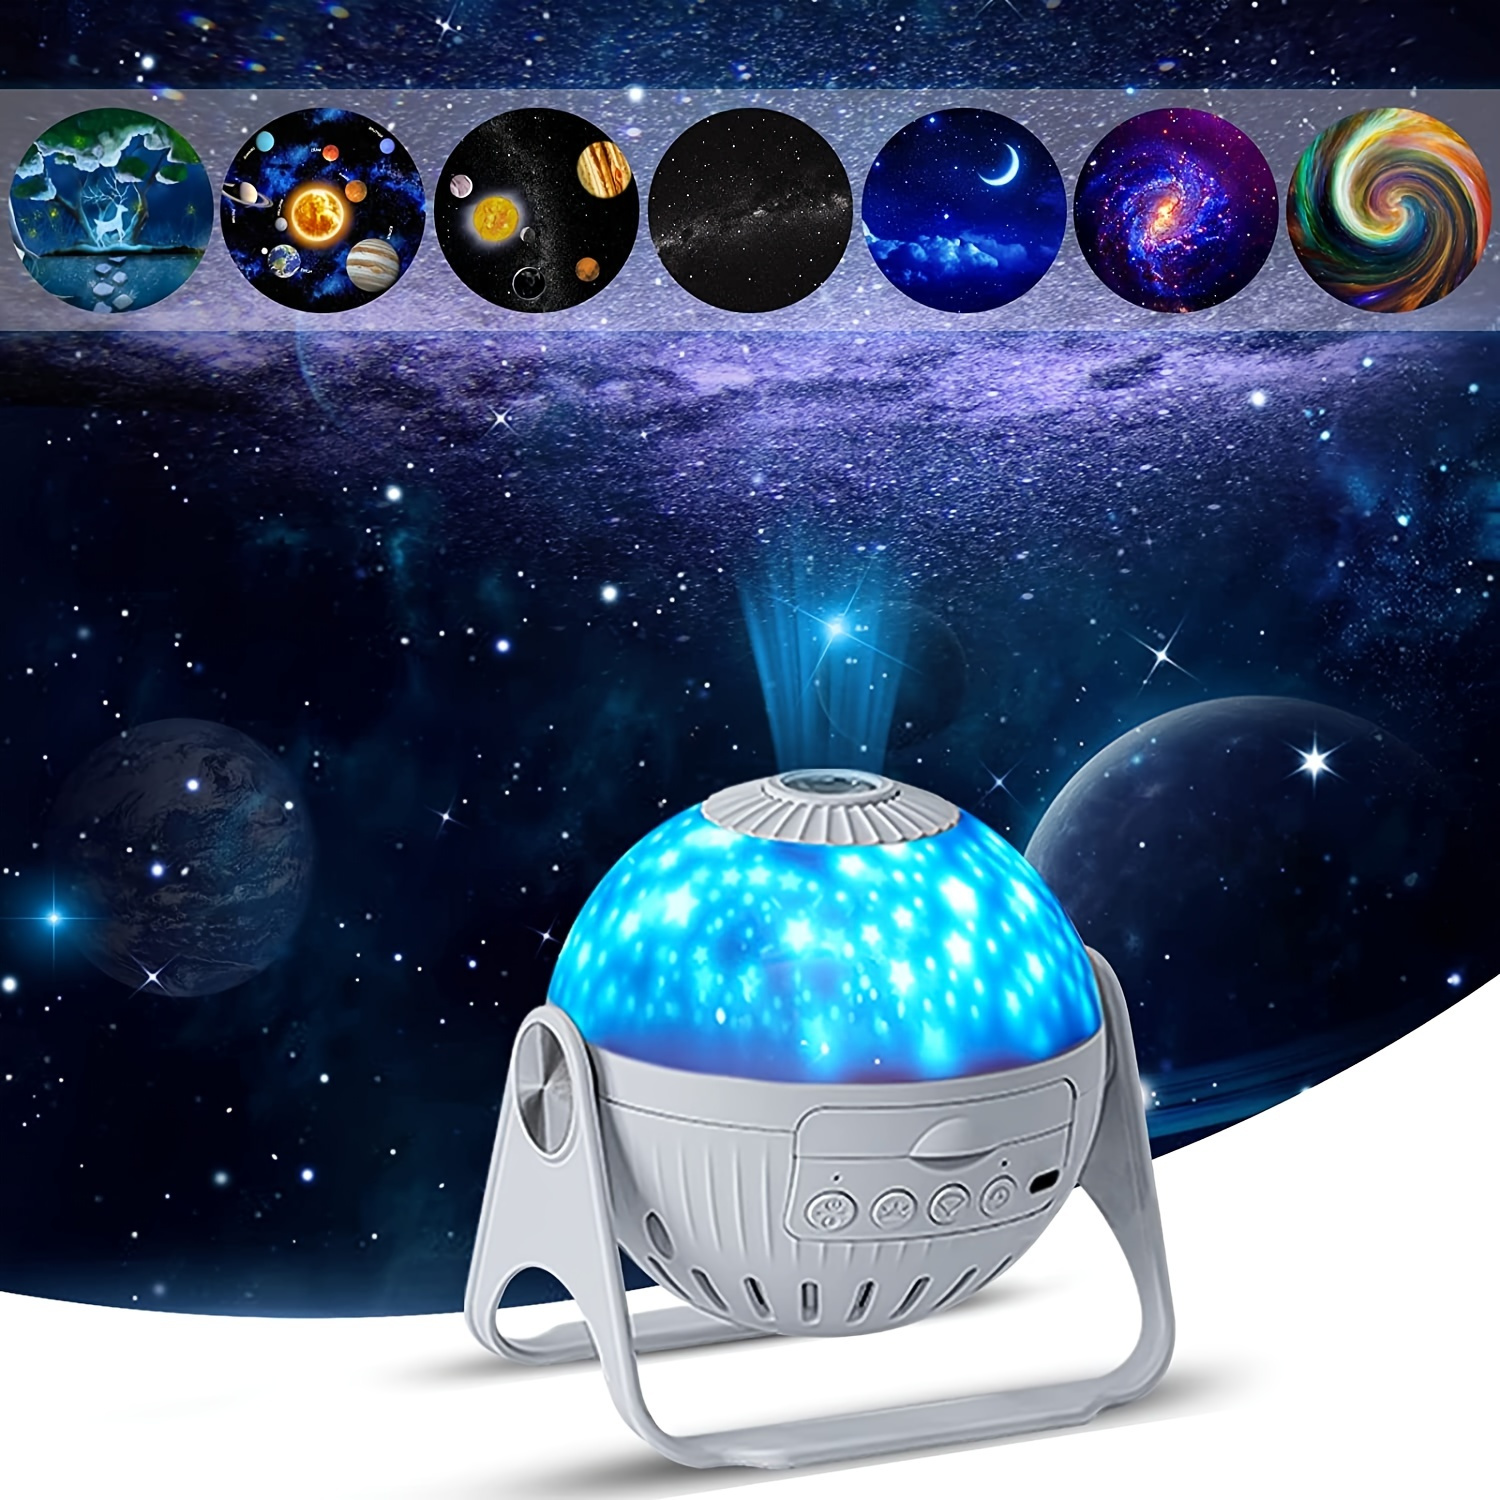 

1pc Planetarium Projector, Galaxy Projector, 7 In 1 Rotating Nebula Moon Star Projector, Bedroom Projection Lamp, Decorative Night Light